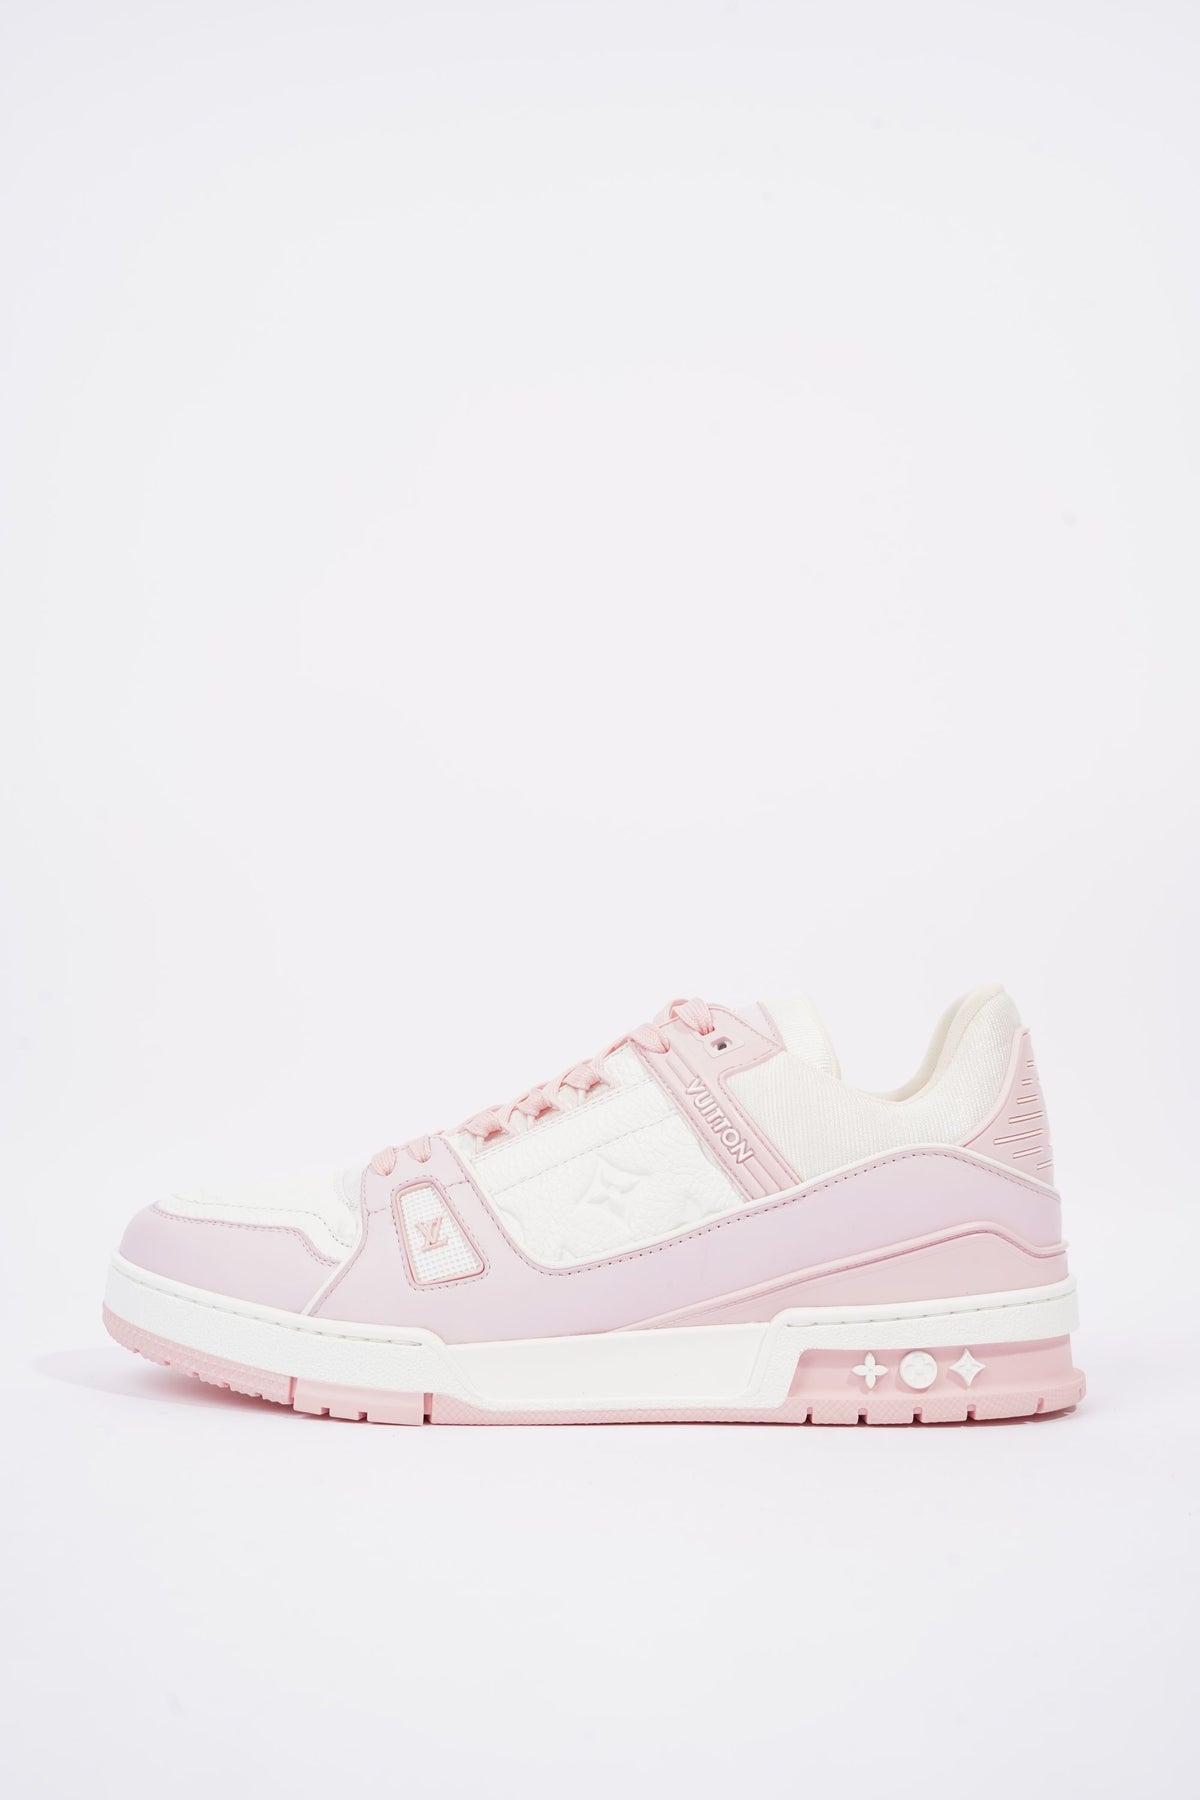 Louis Vuitton Trainer Pink | Size 10